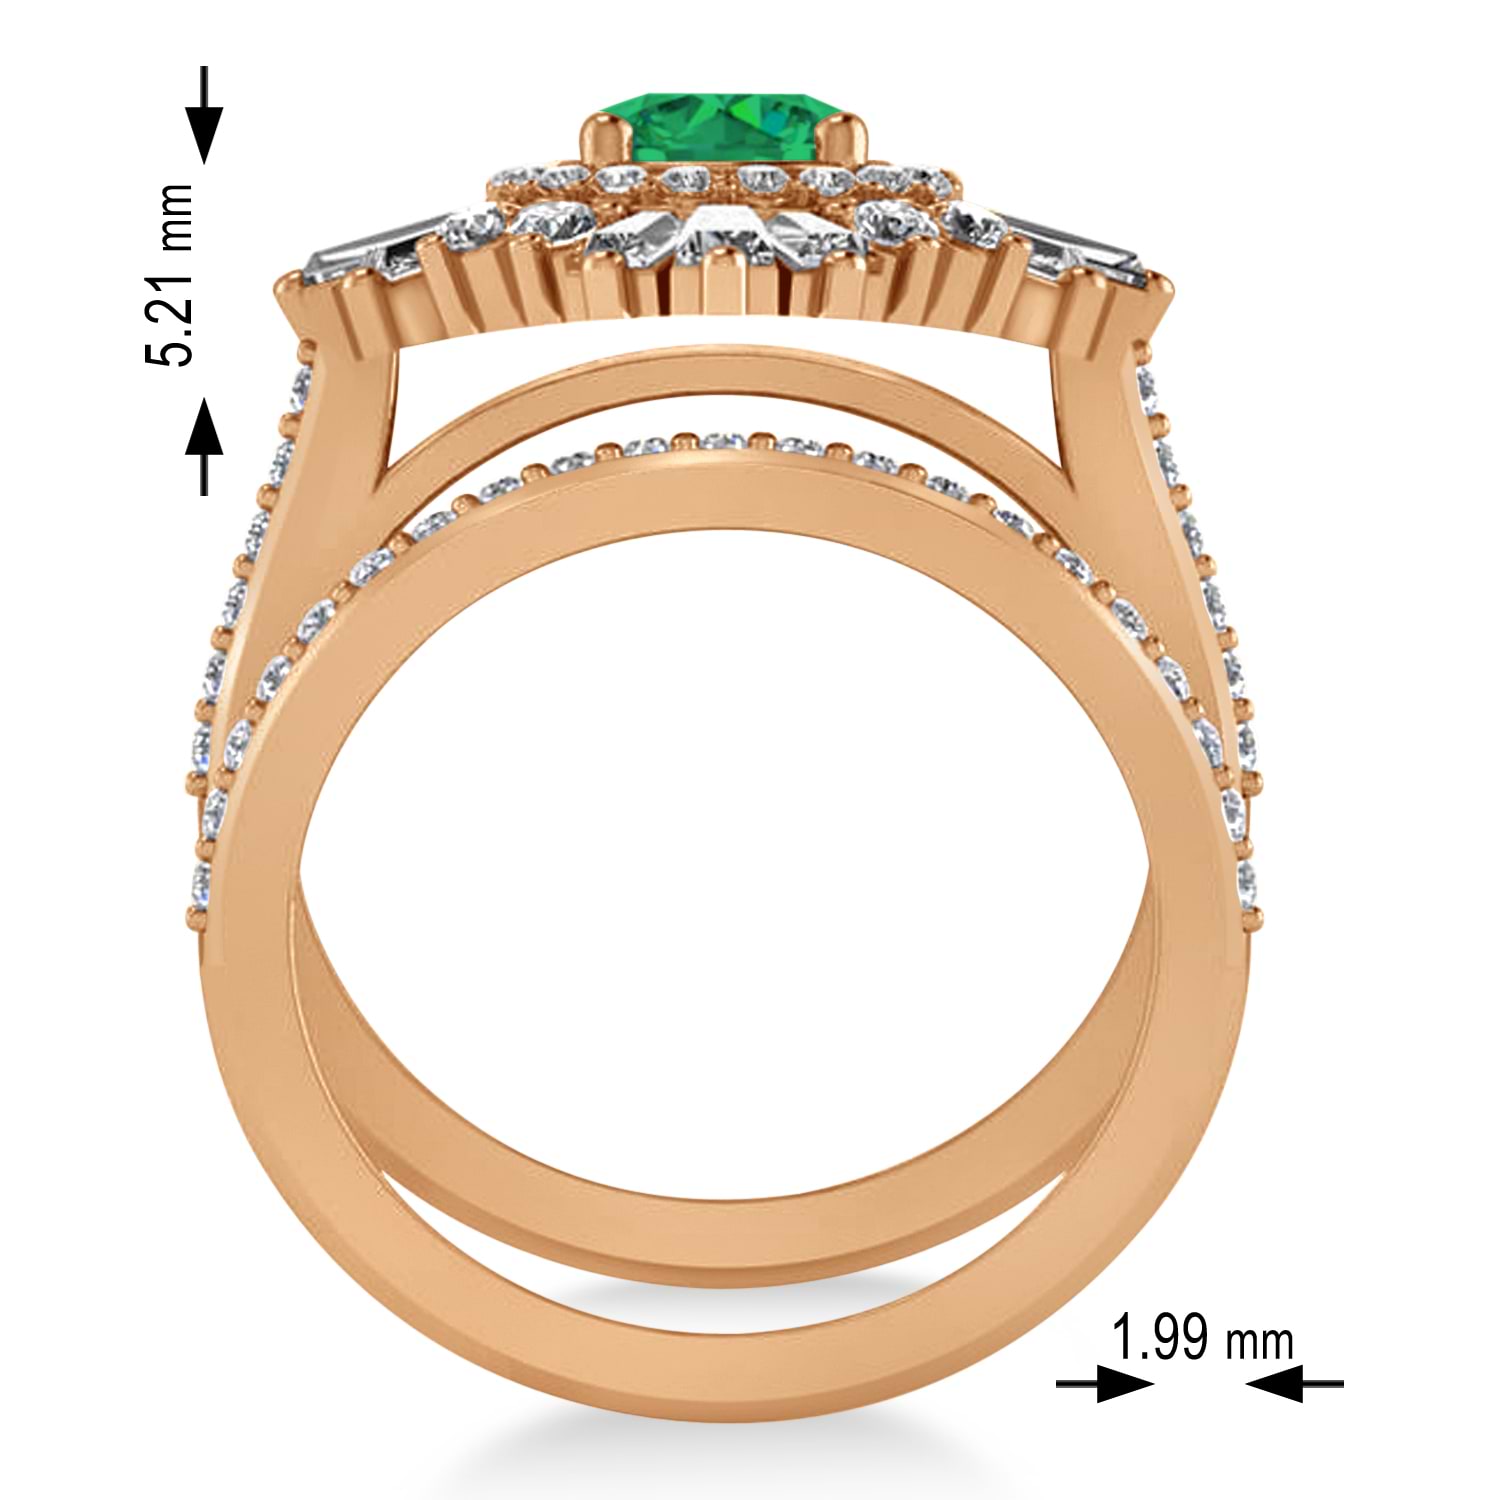 Emerald & Diamond Ballerina Engagement Ring 14k Rose Gold (2.74 ctw)